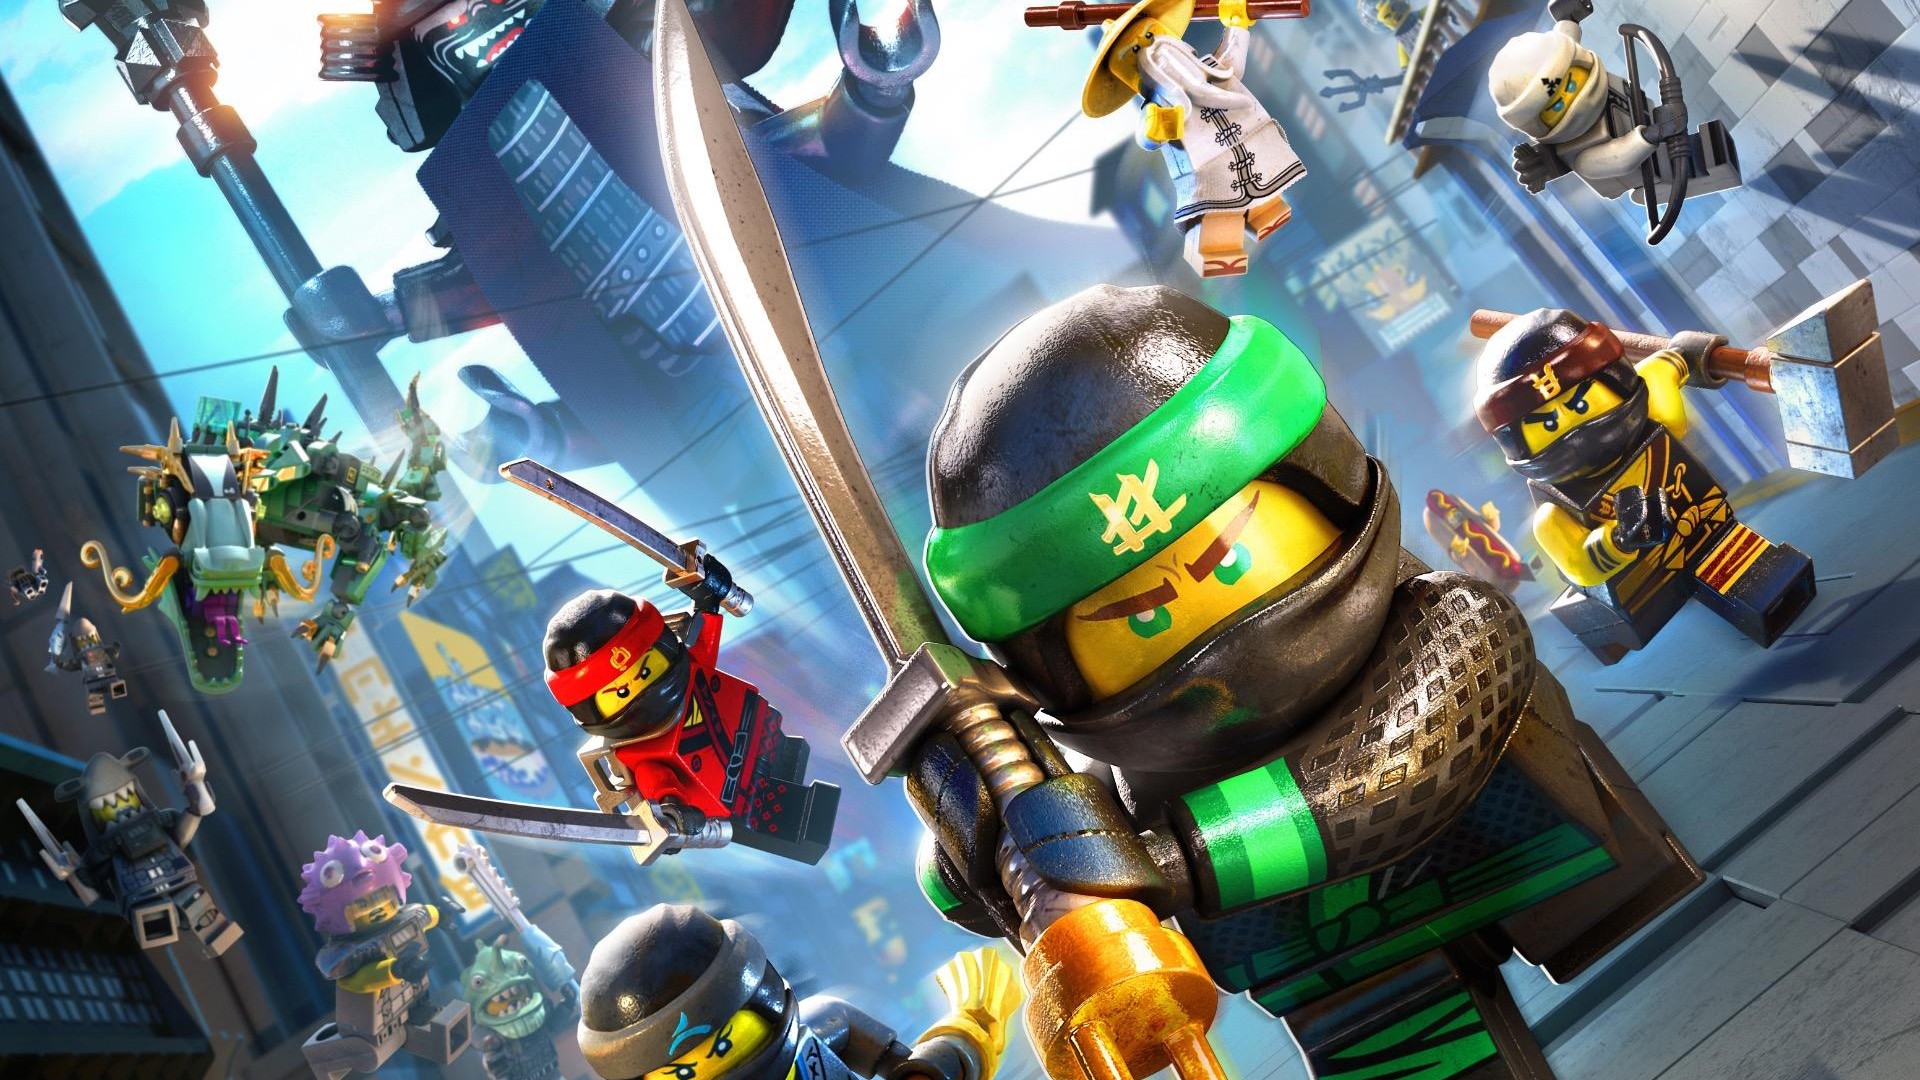 Lego Ninjago - Street Fight